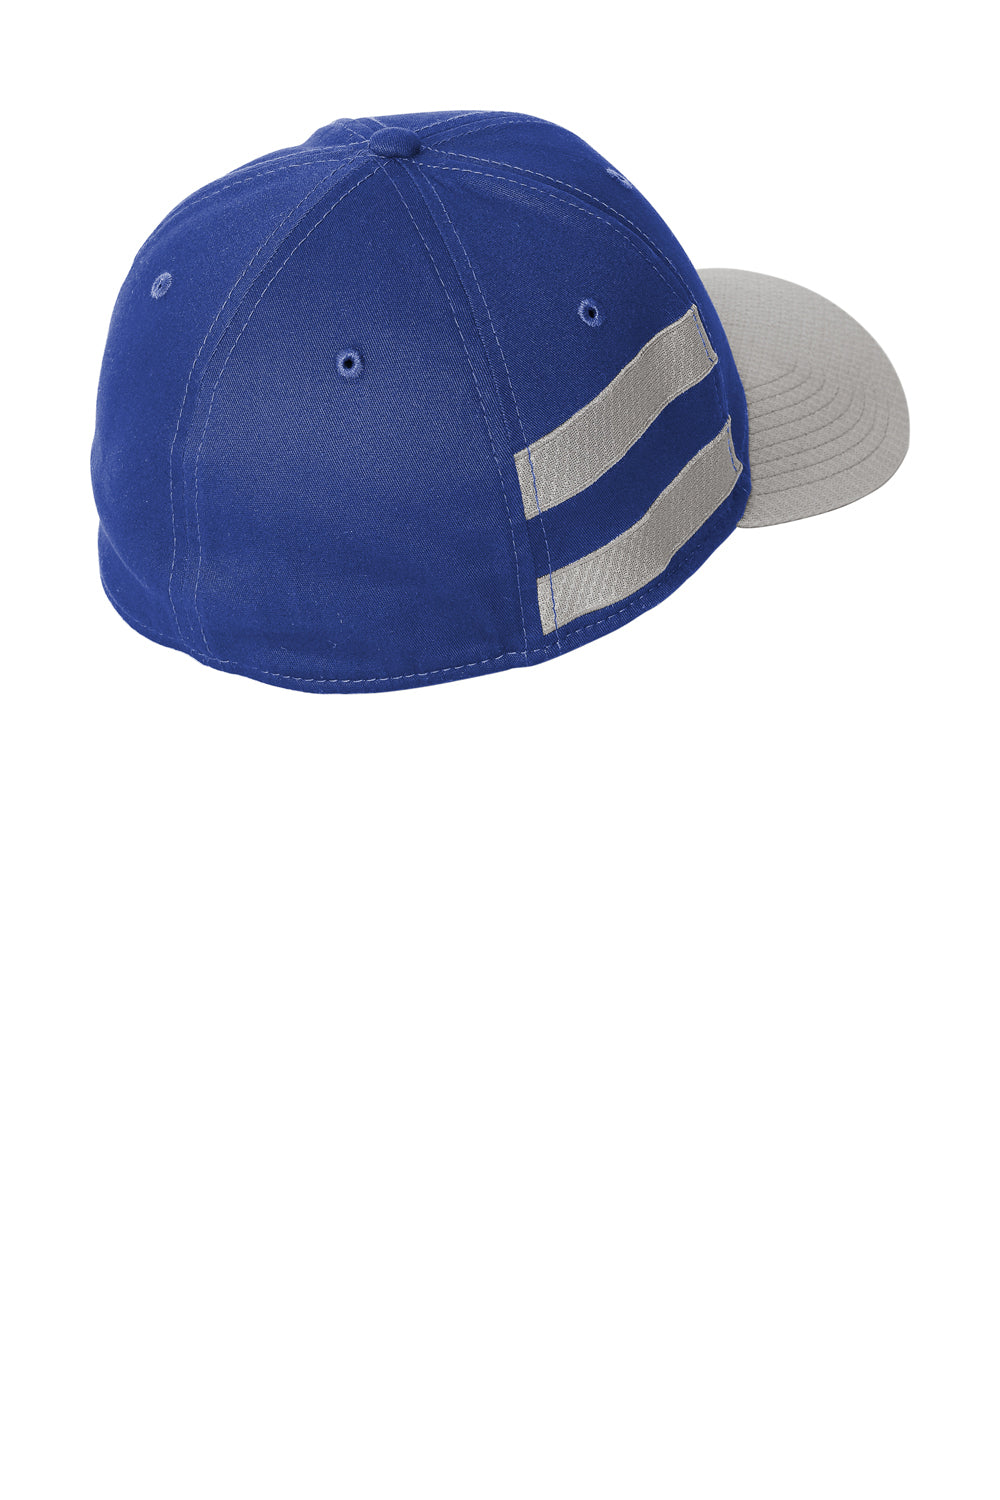 New Era NE1122 Striped Stretch Fit Hat Royal Blue/Grey Side